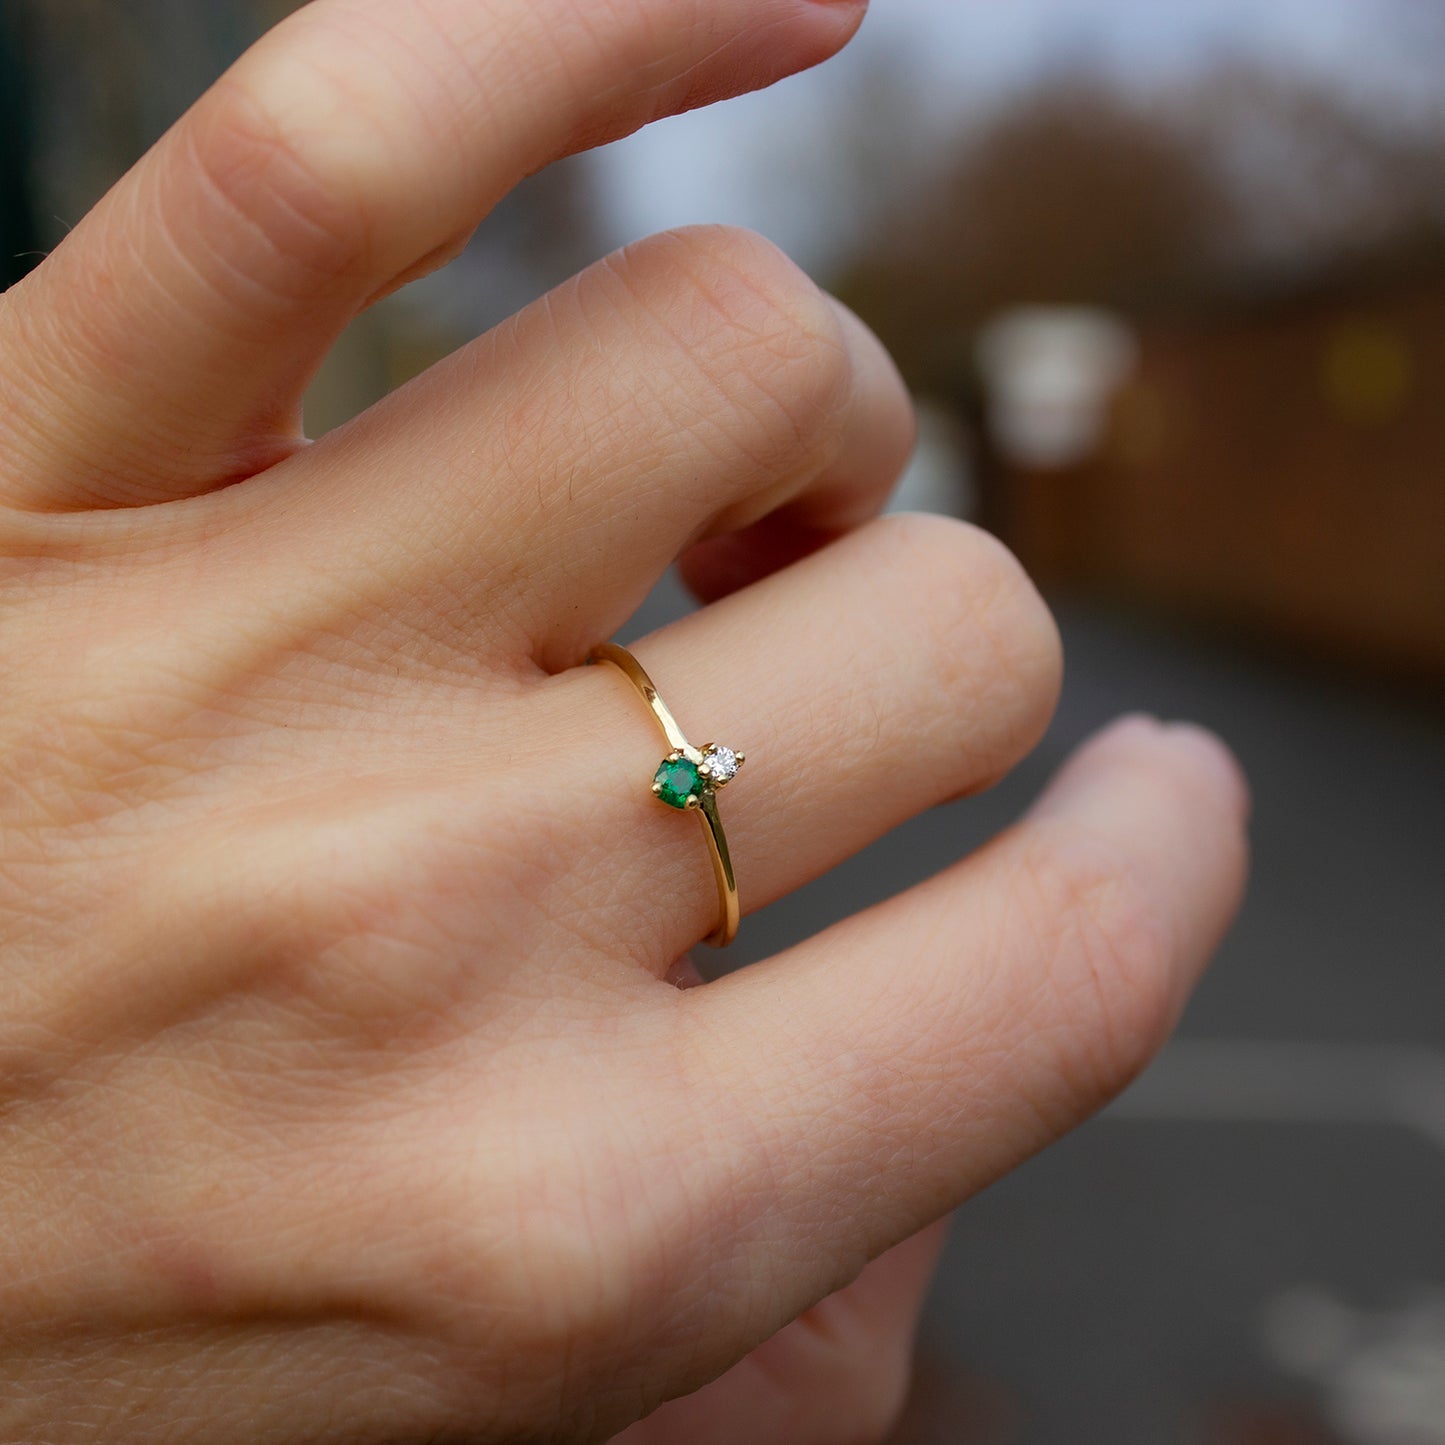 Duo Ring - Emerald And White Diamond